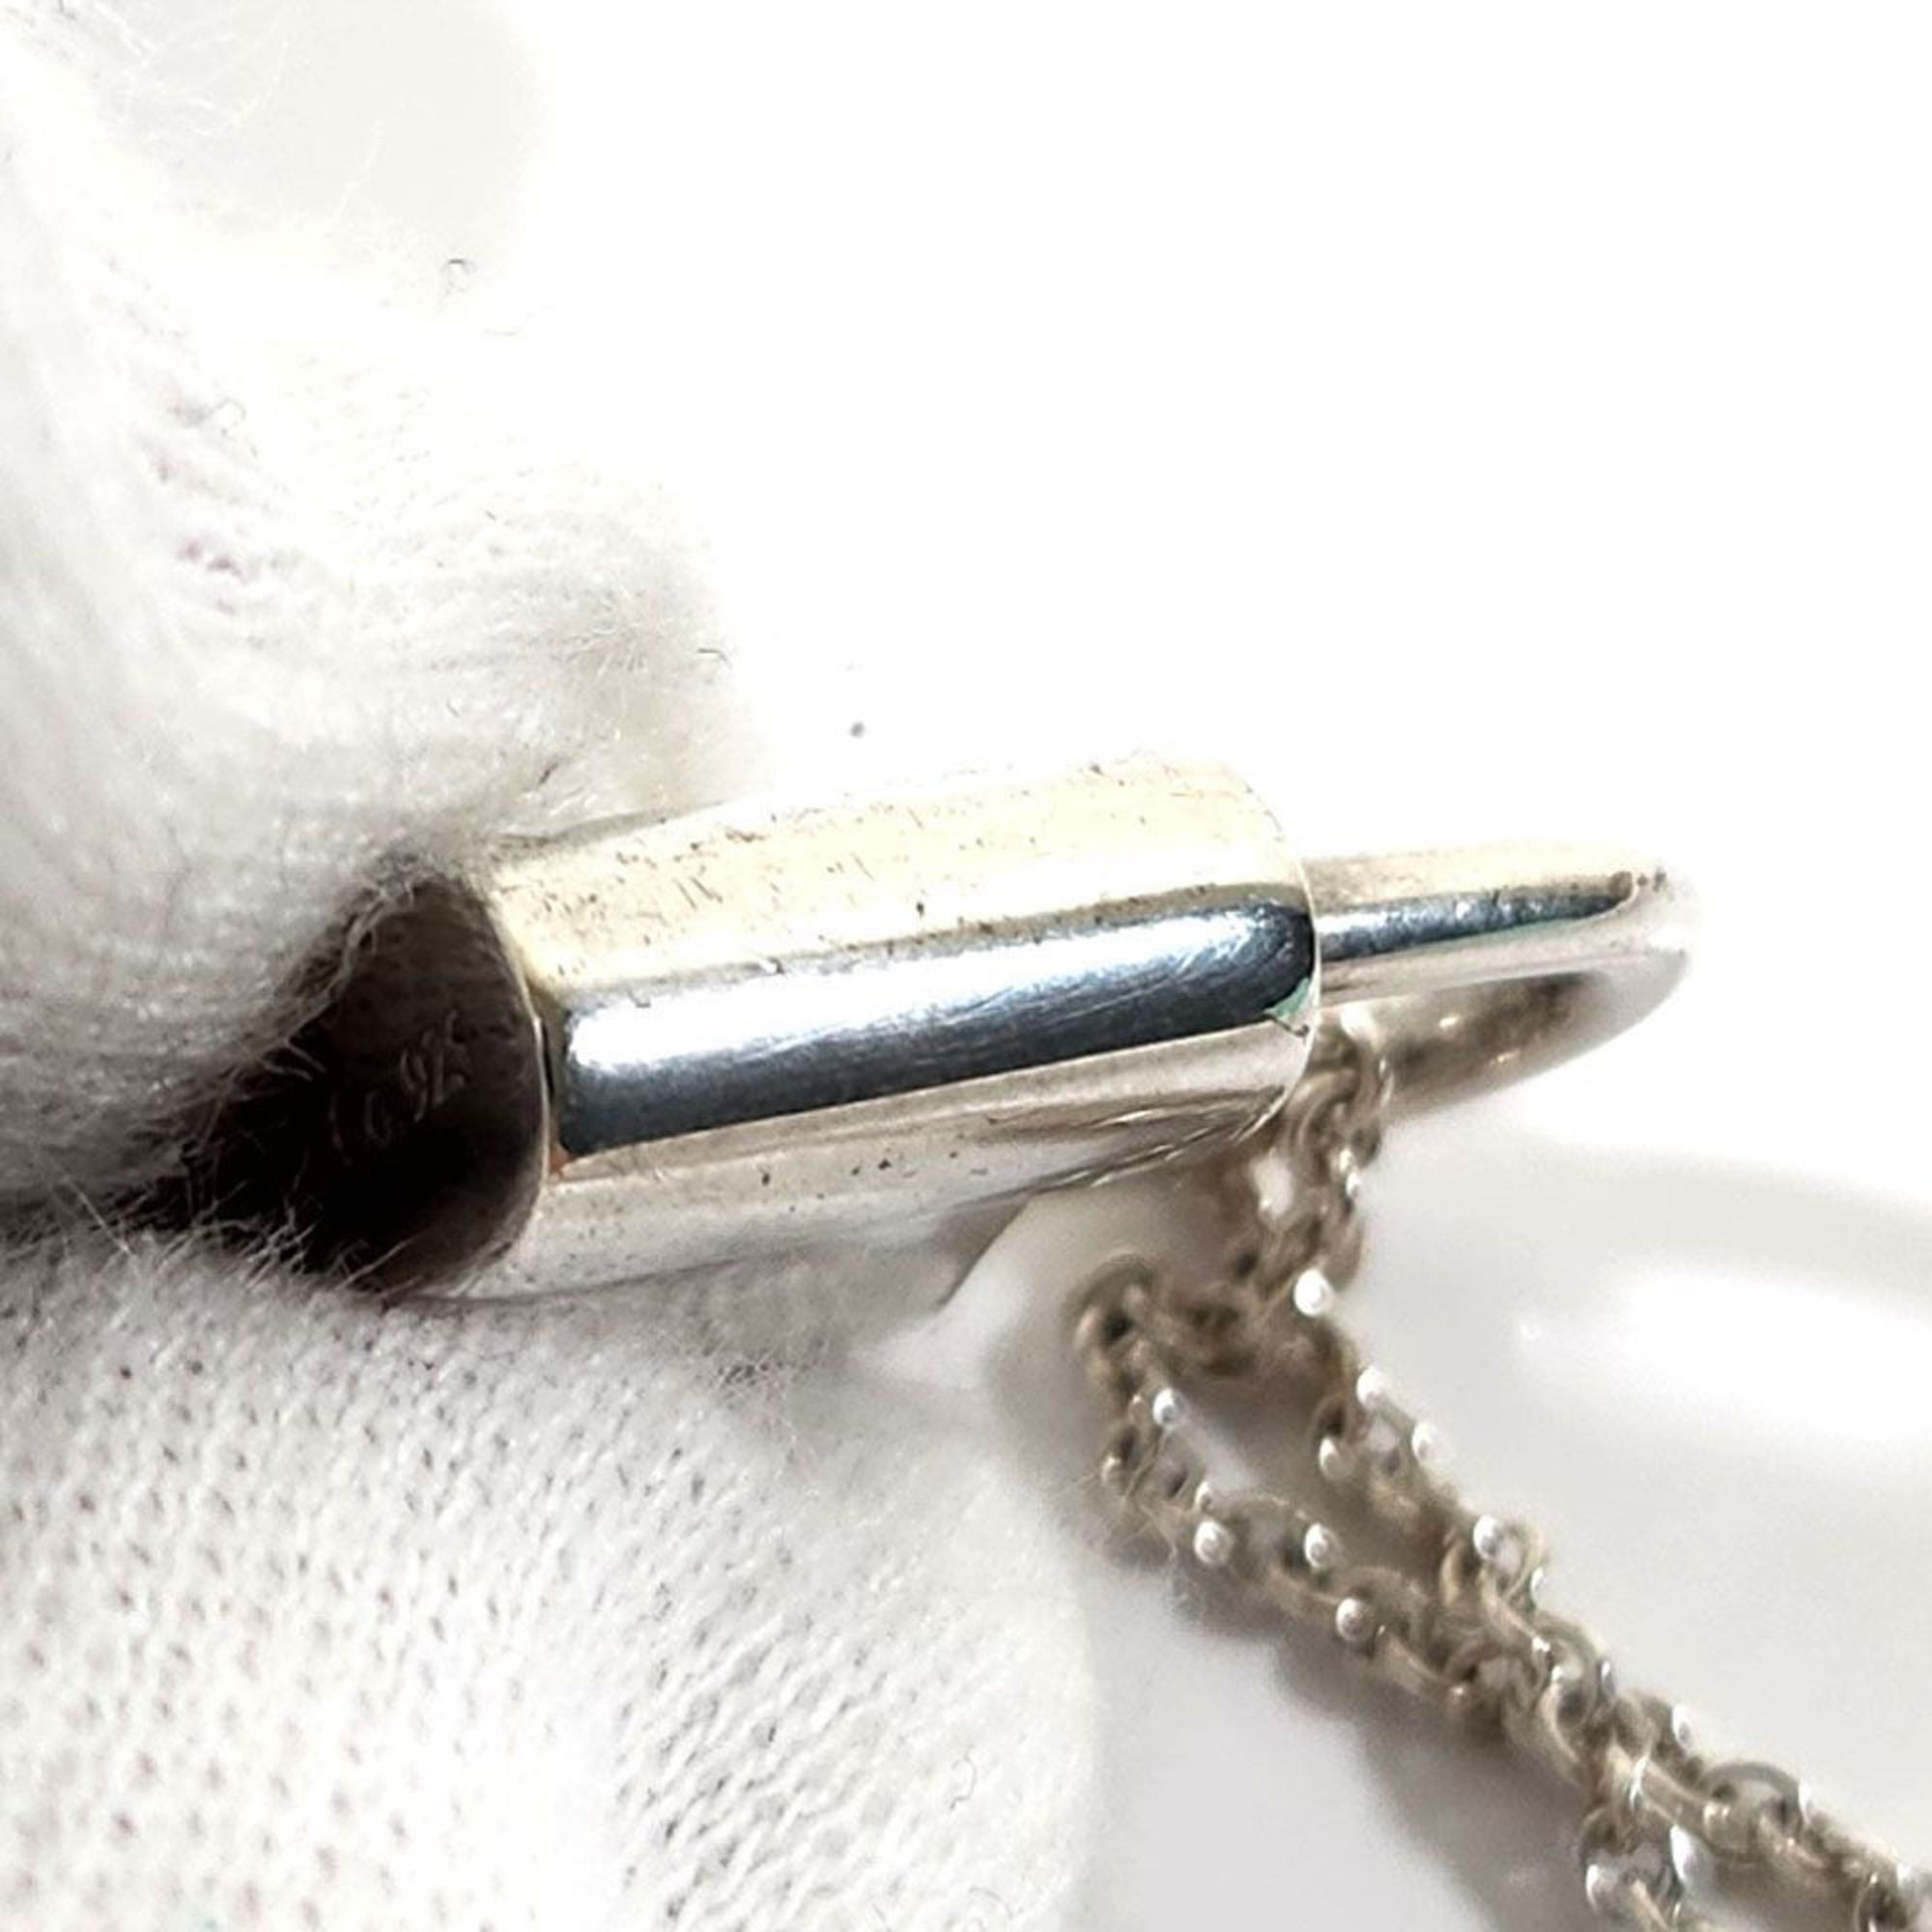 Tiffany TIFFANY Necklace 1837 Cadena Motif SV 925 Pendant Women's Sterling Silver Key Padlock